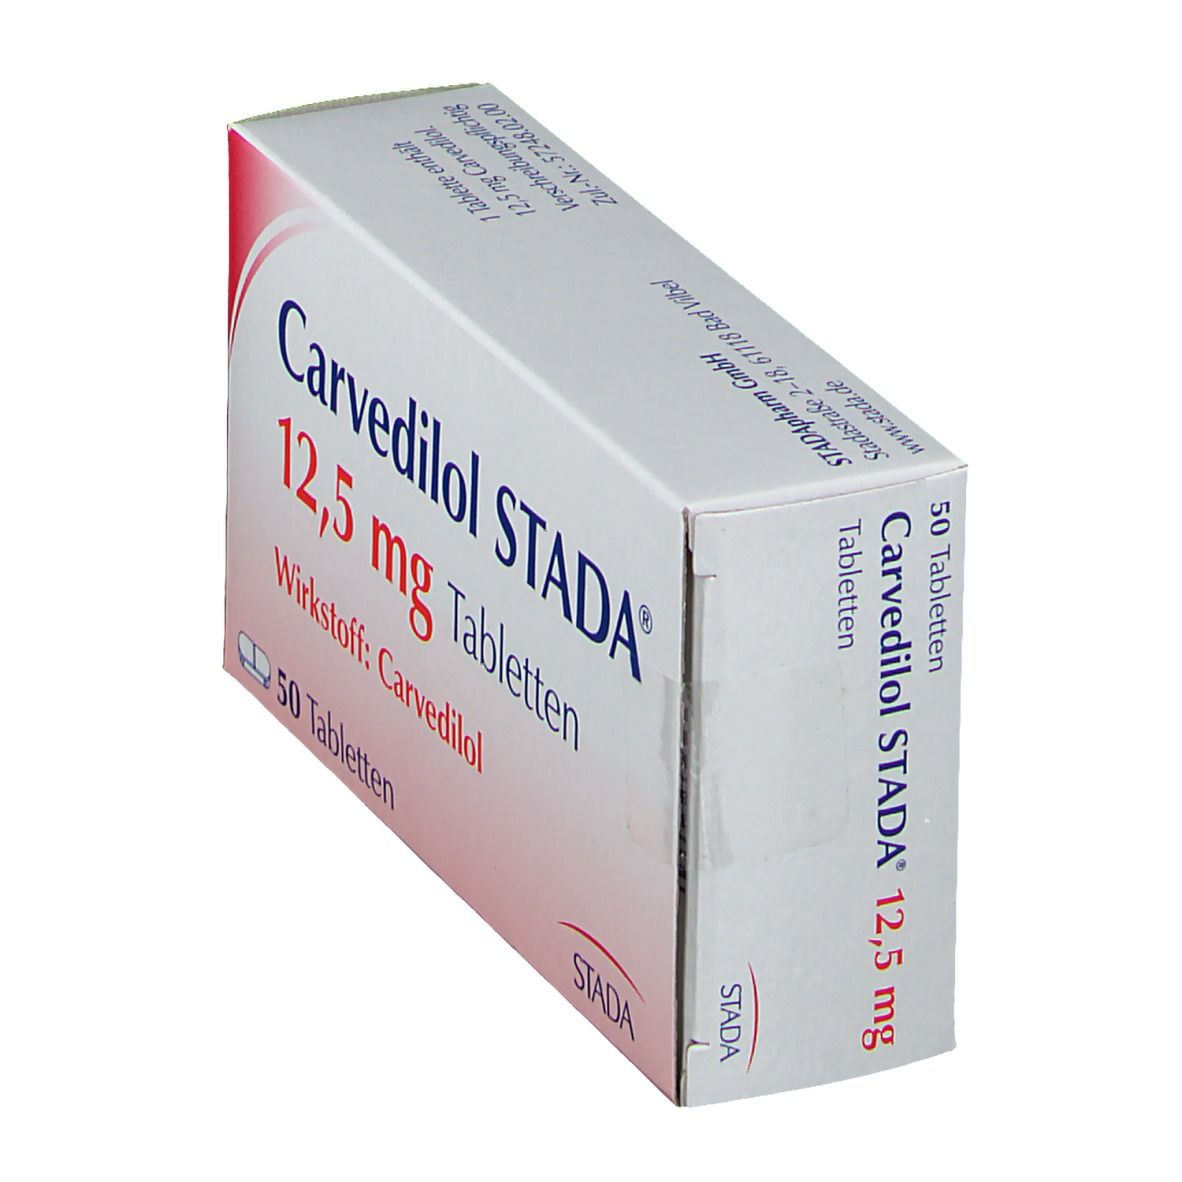 Carvedilol STADA® 12,5 mg